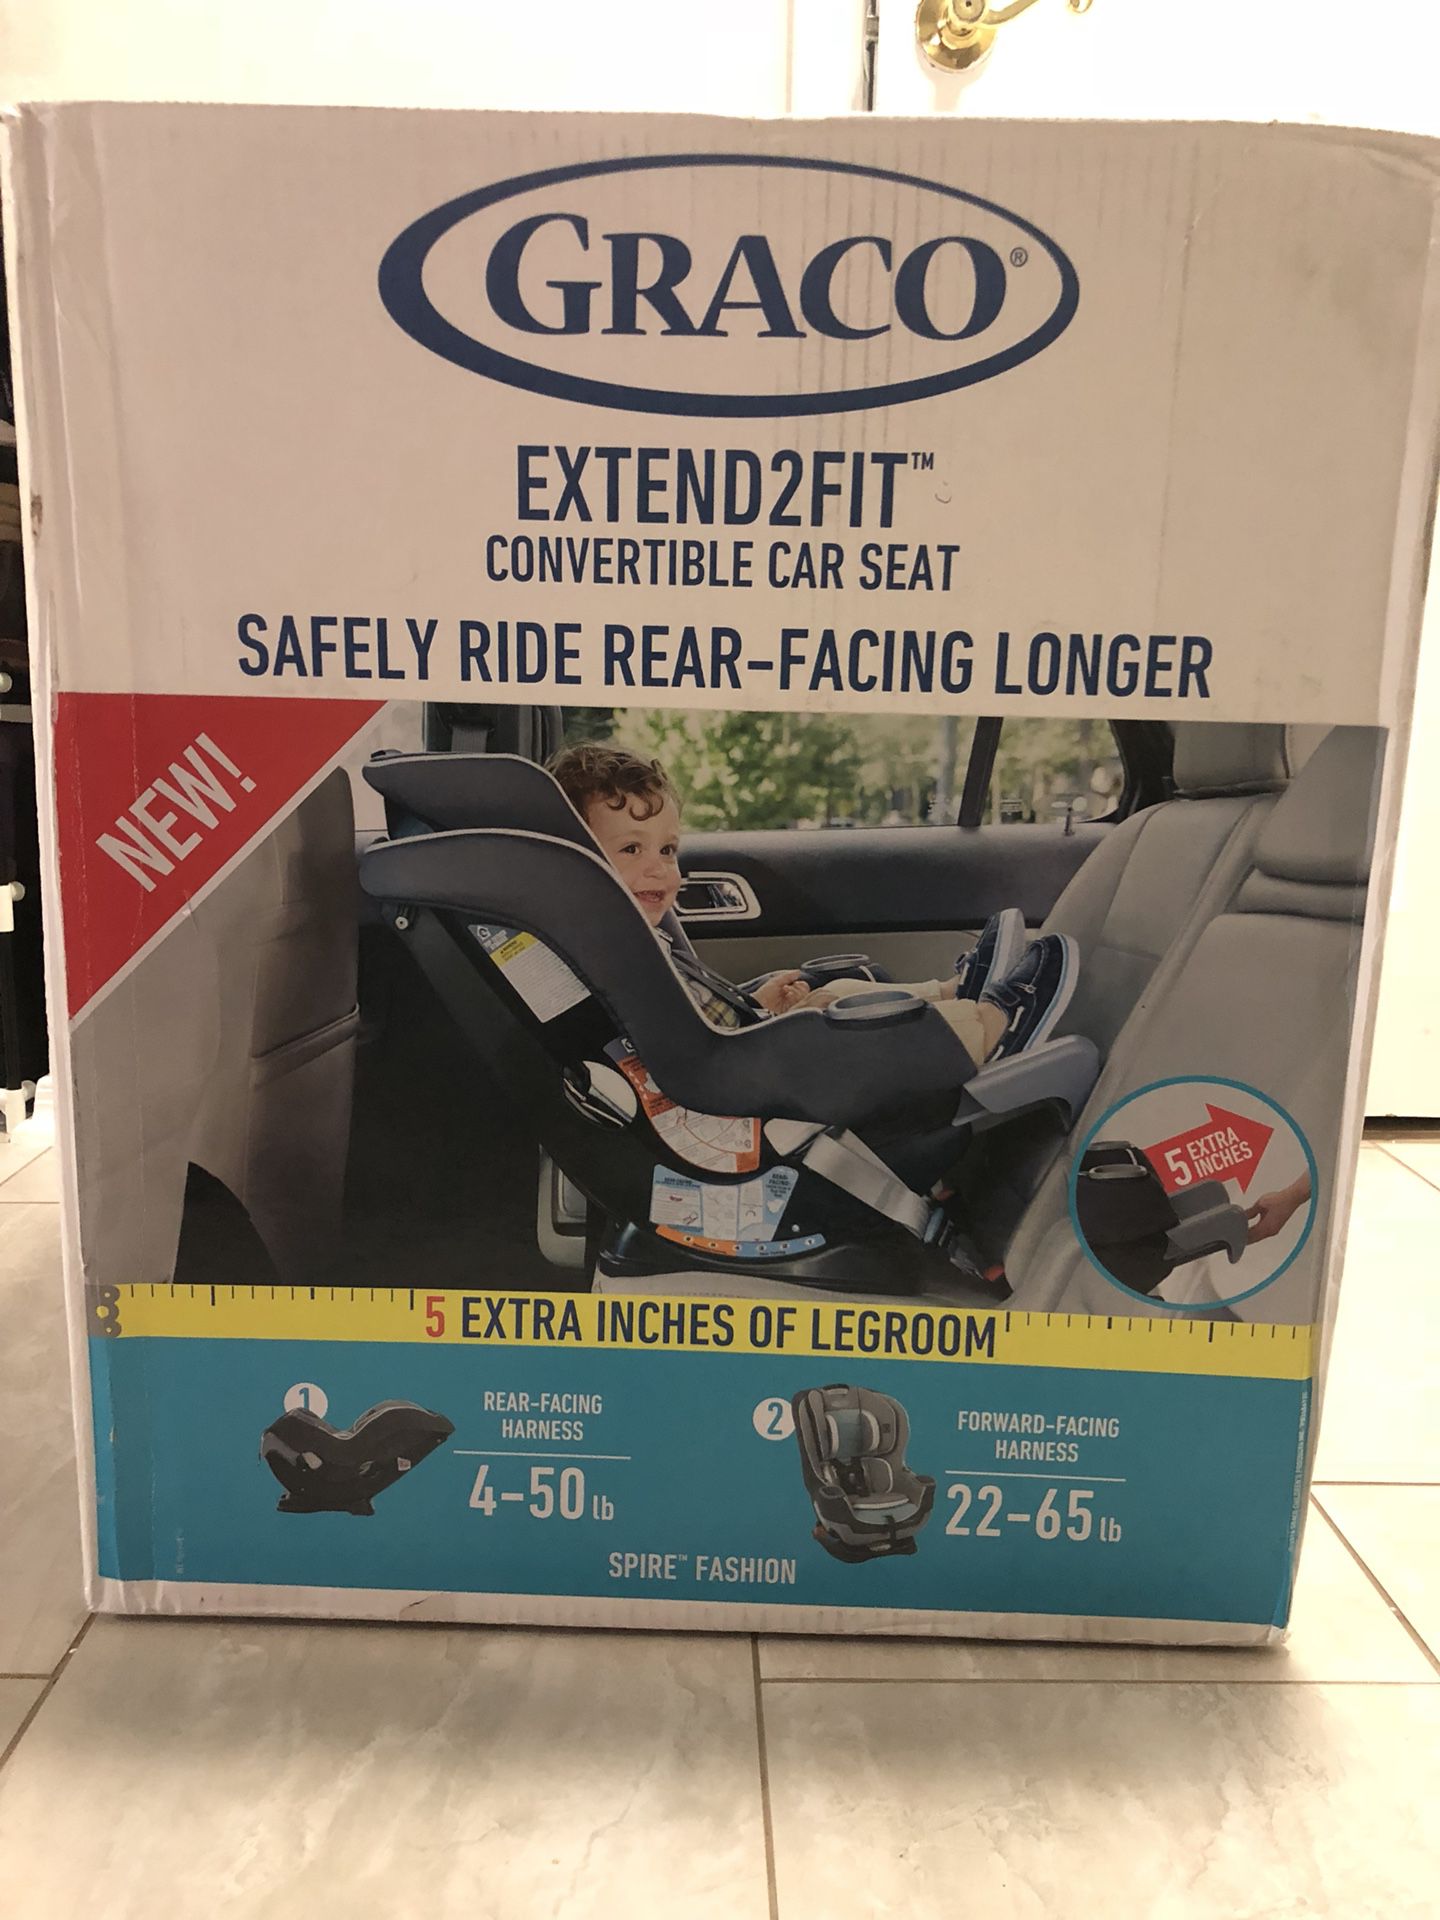 GRACO EXTEND2FIT convertible Car Seat *** Brand New*** Nueva, Nunca Usada***